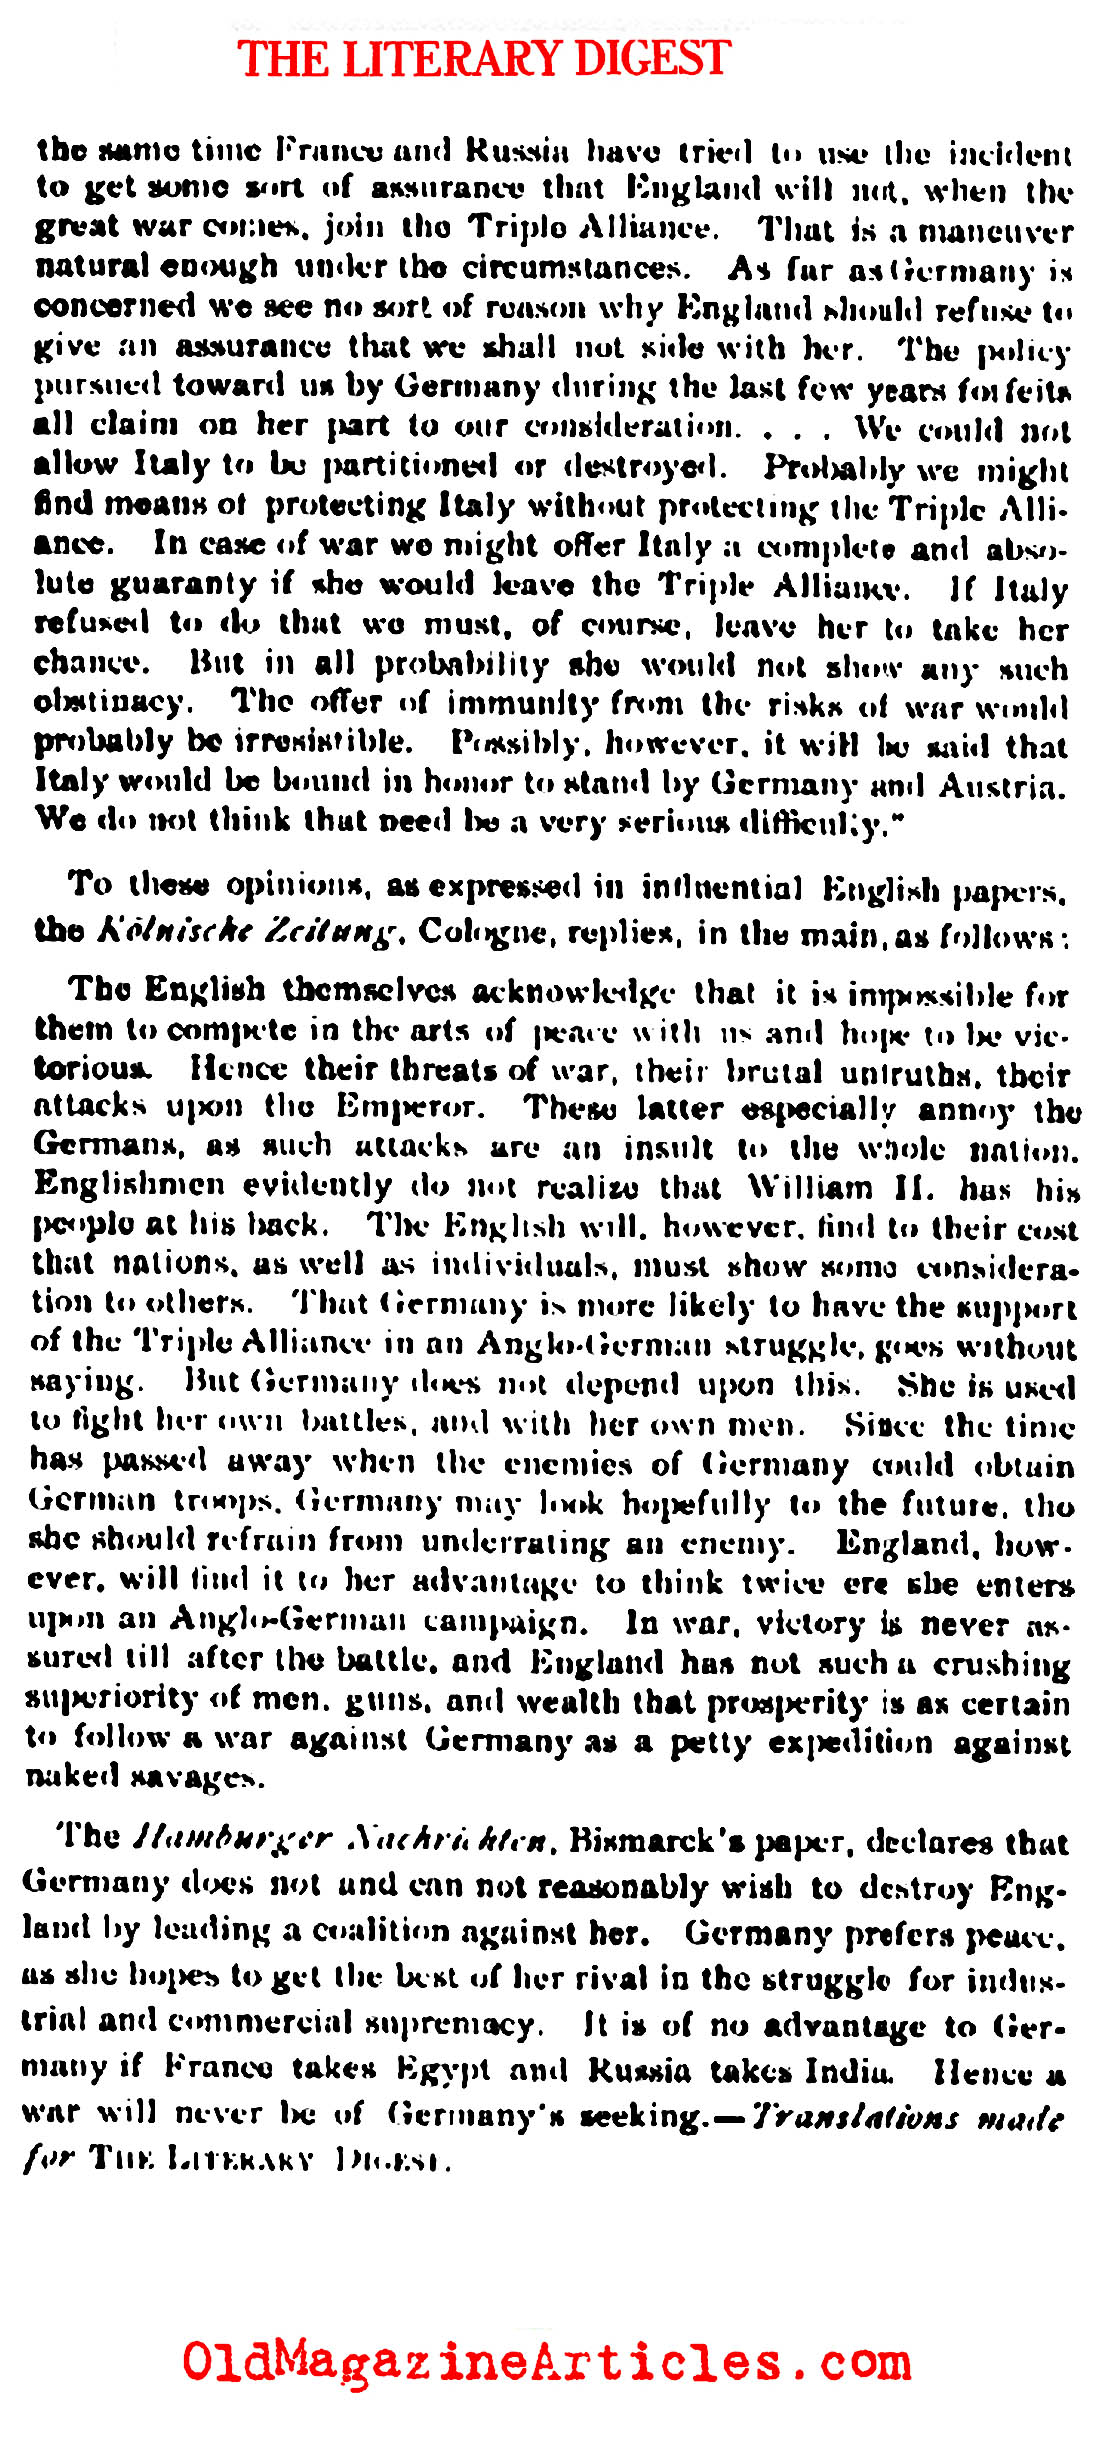 Must England Destroy Germany? (Literary Digest, 1897)